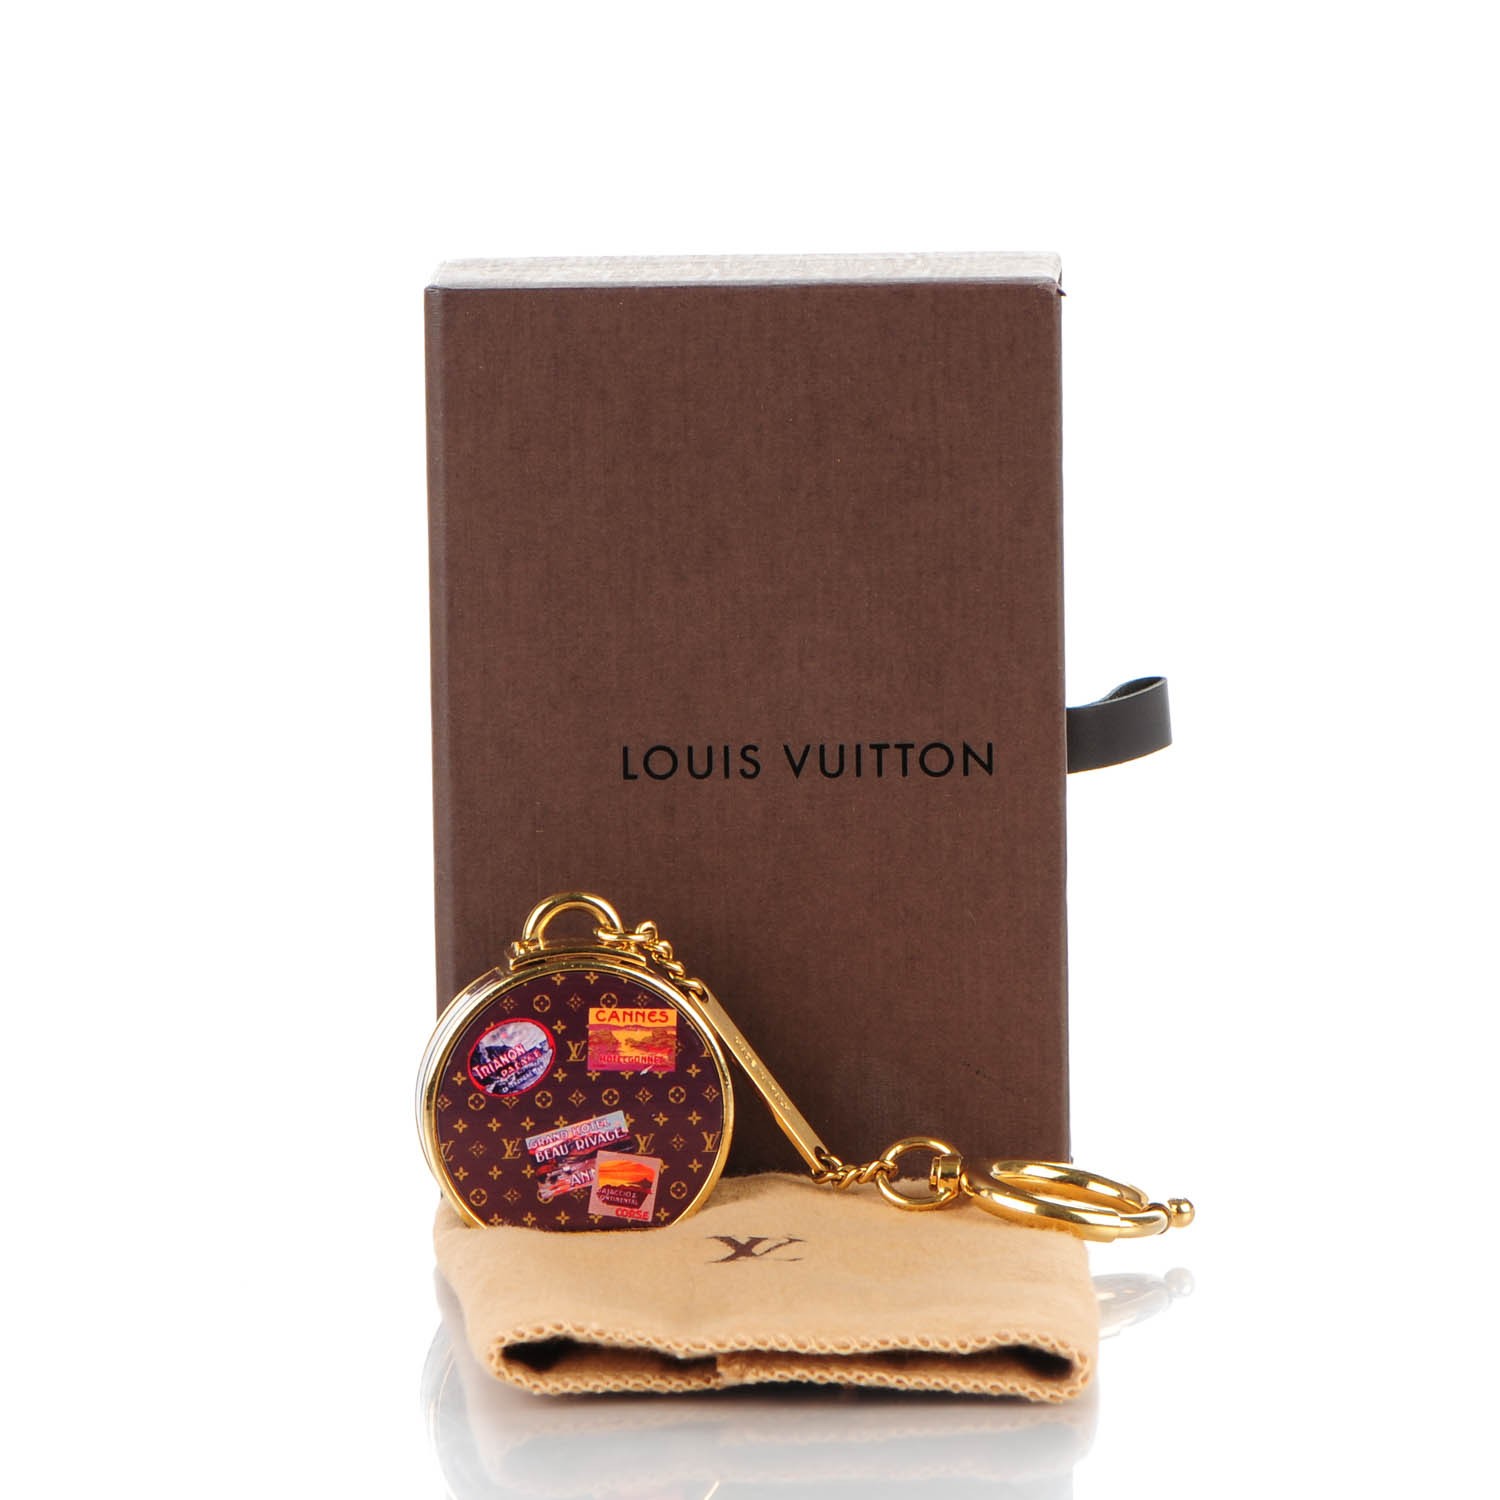 LOUIS VUITTON Monogram Hat Box Bag Charm 160262